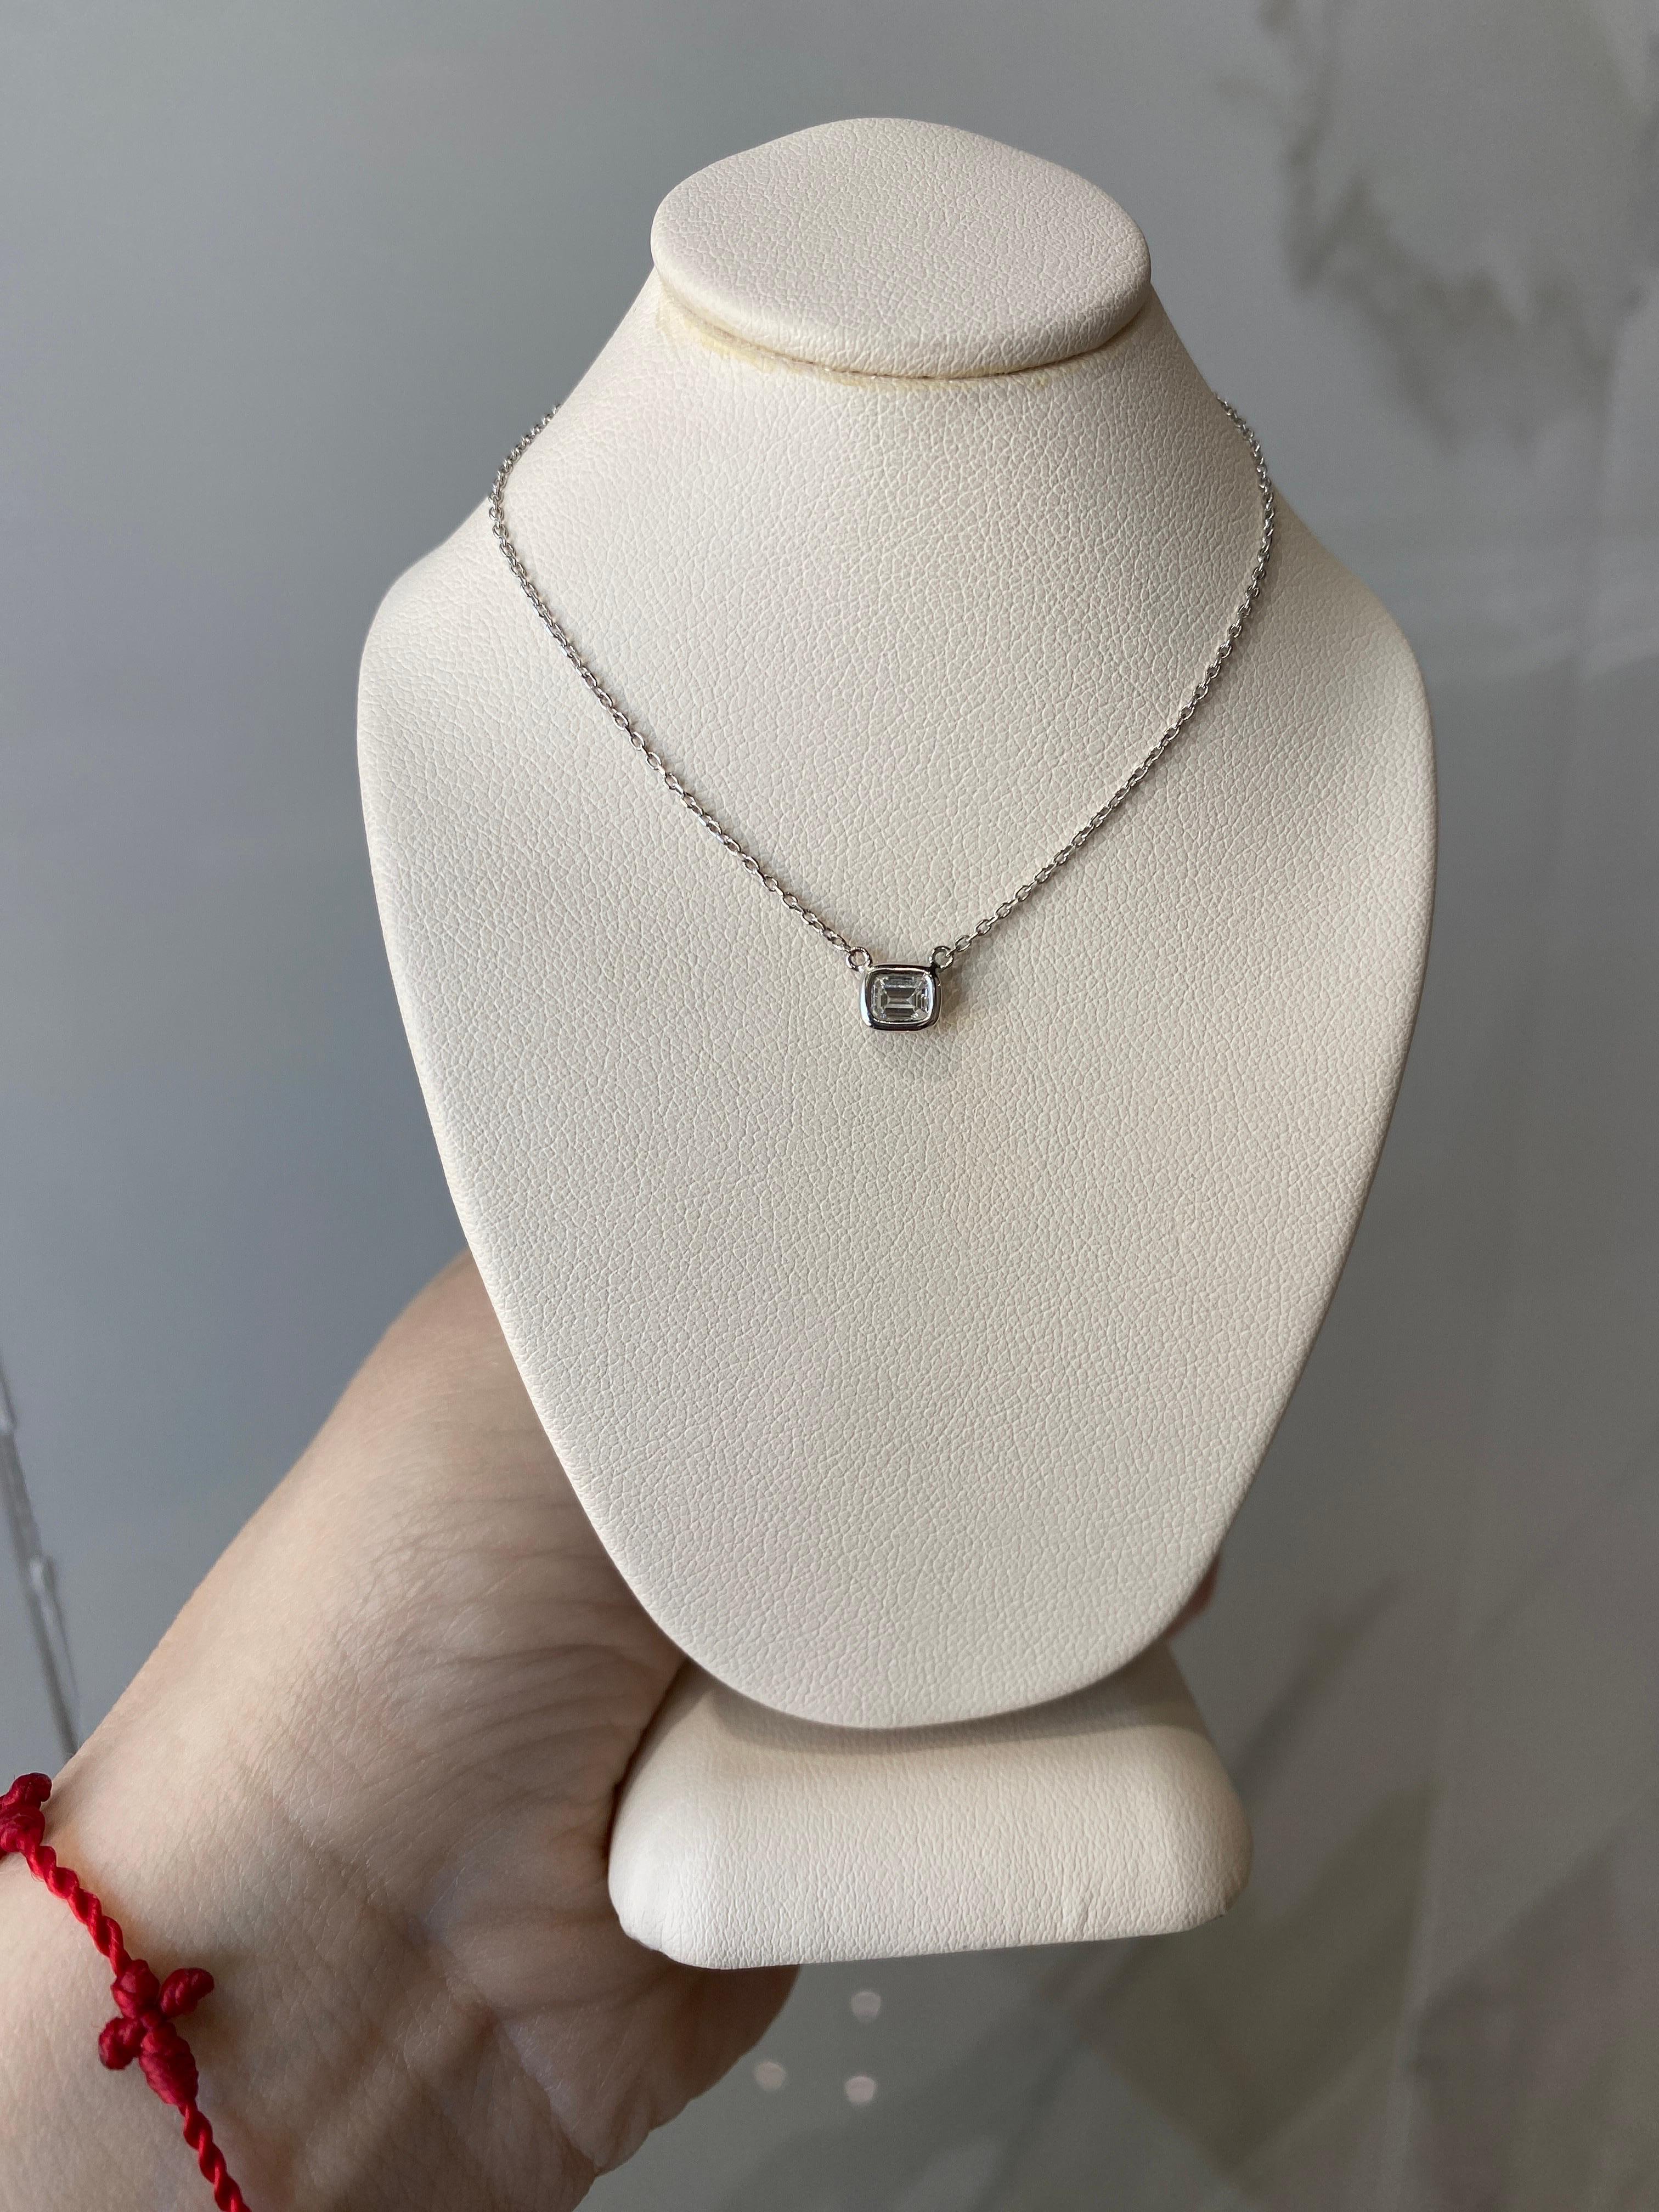 14k White Gold 0.23 Carat Natural Emerald Cut Diamond Pendant Necklace  For Sale 6